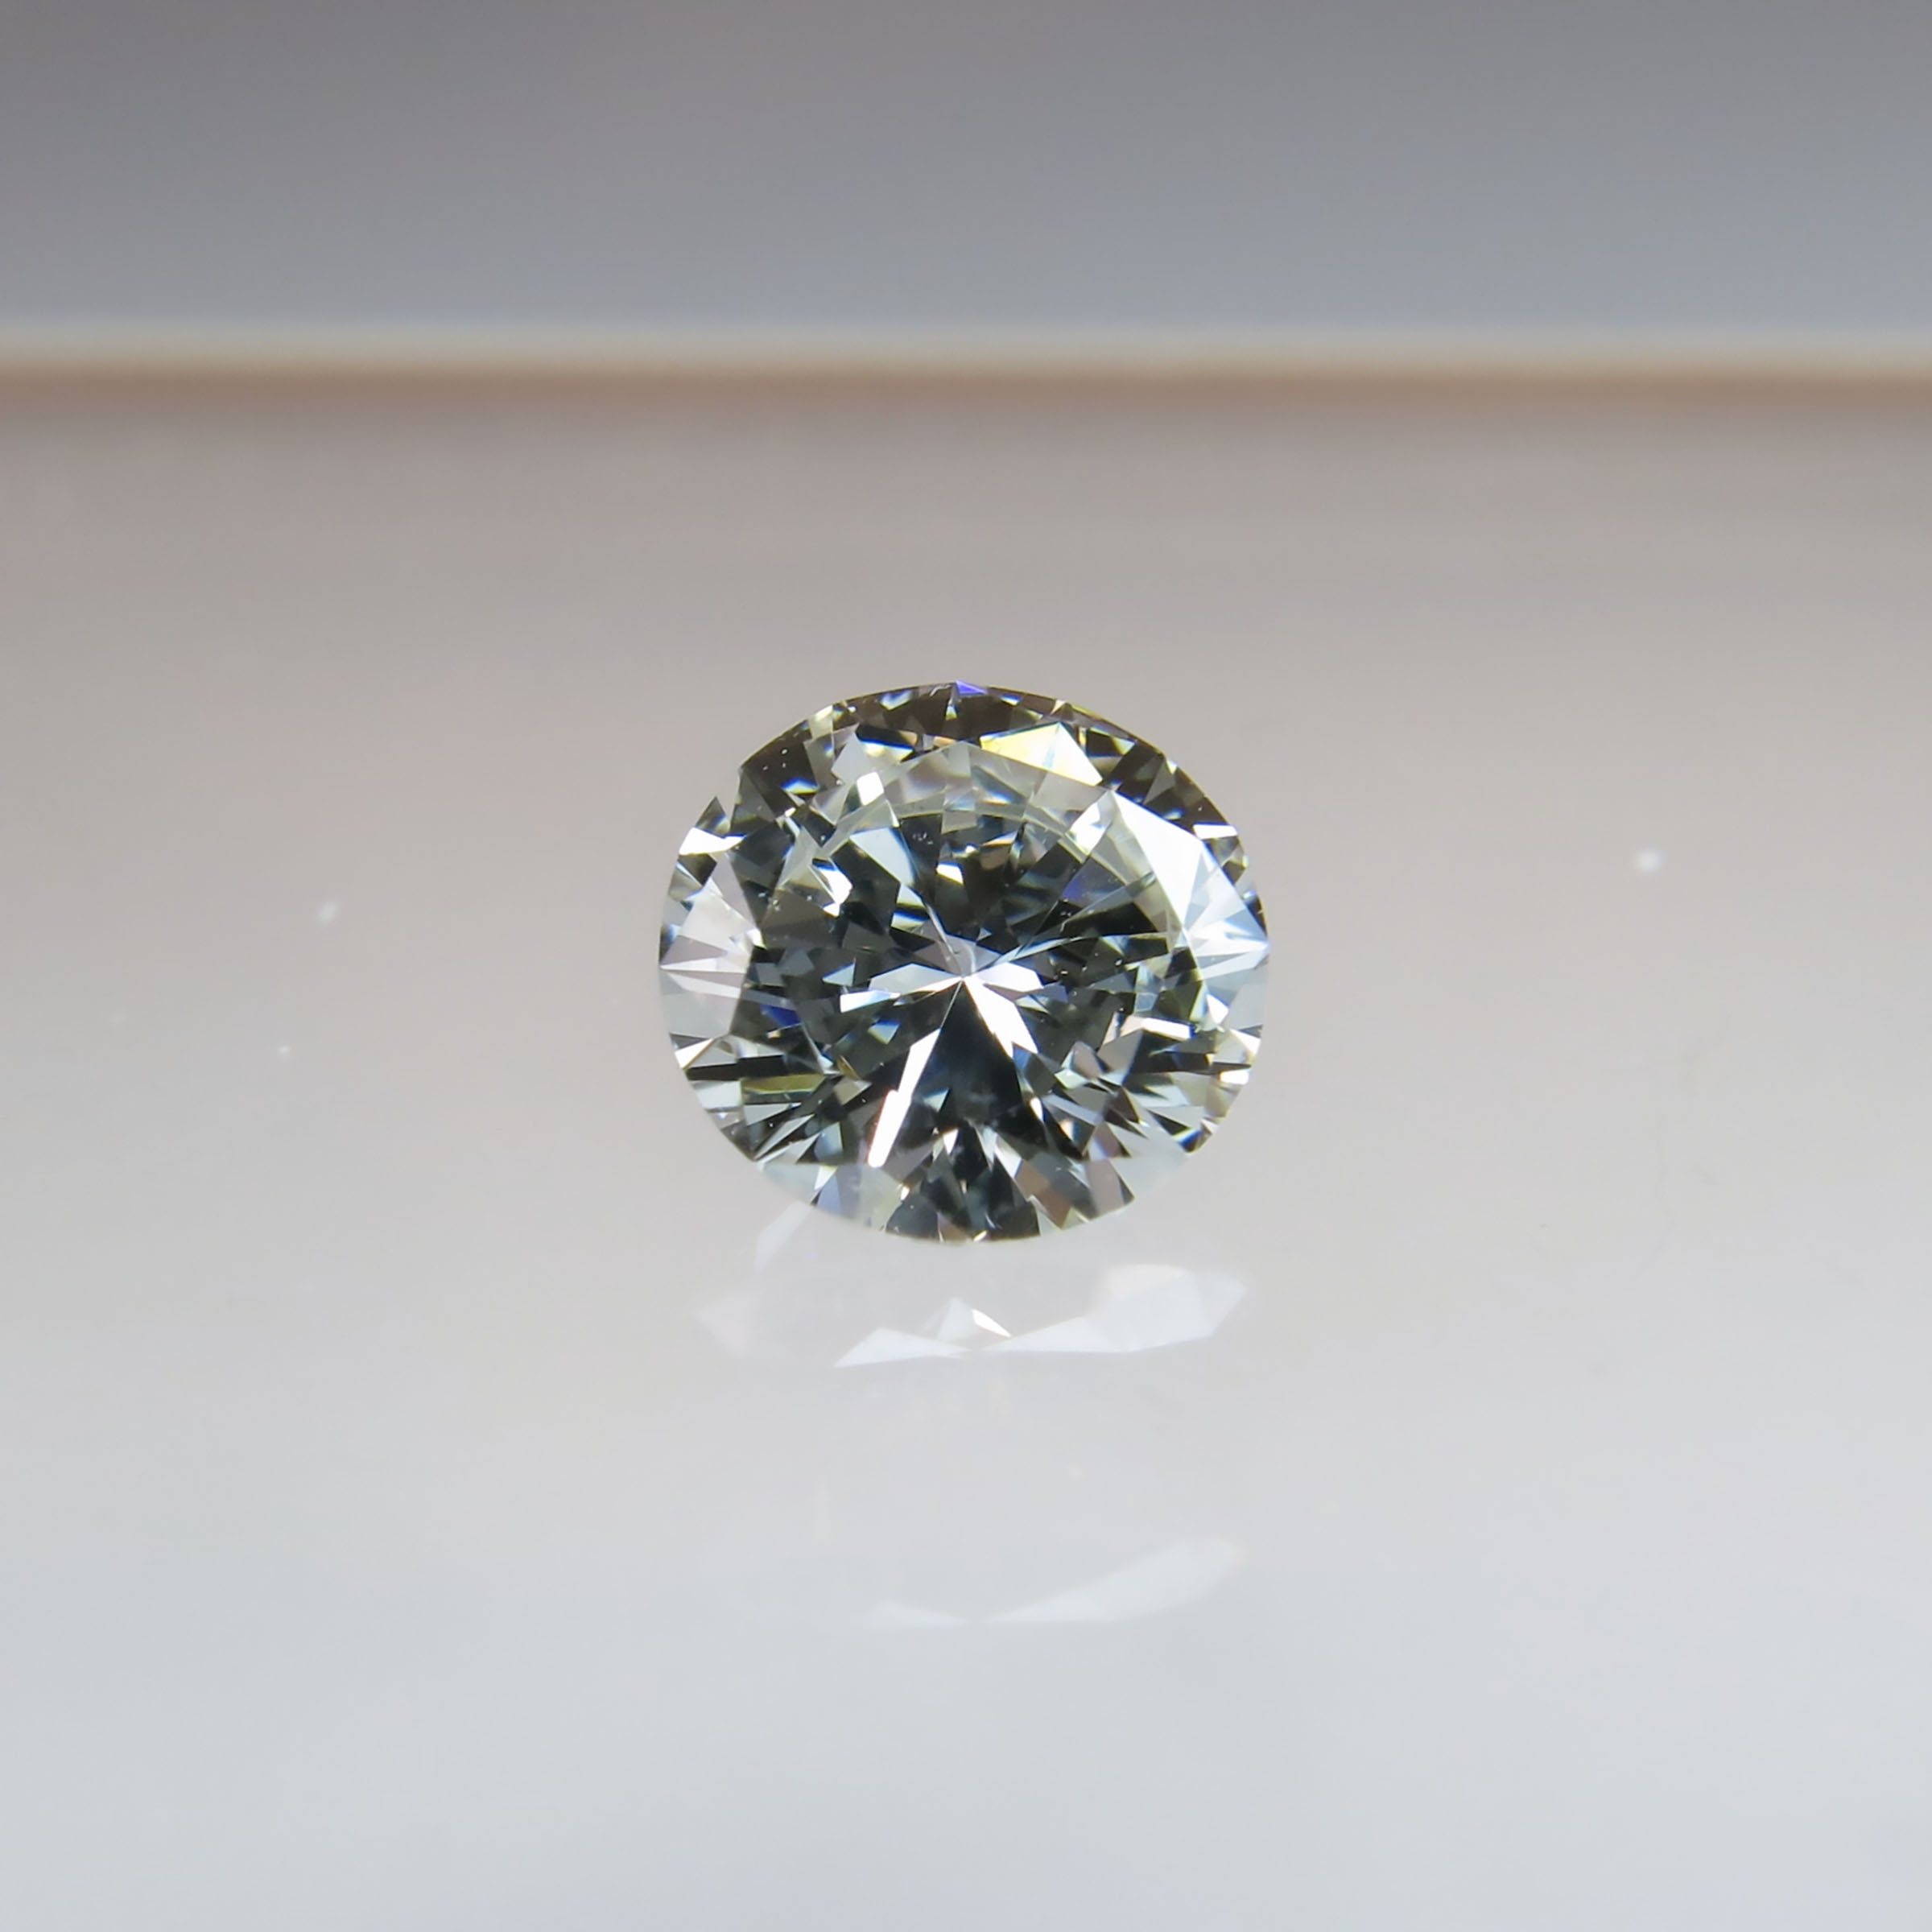 Unmounted Brilliant Cut Diamond